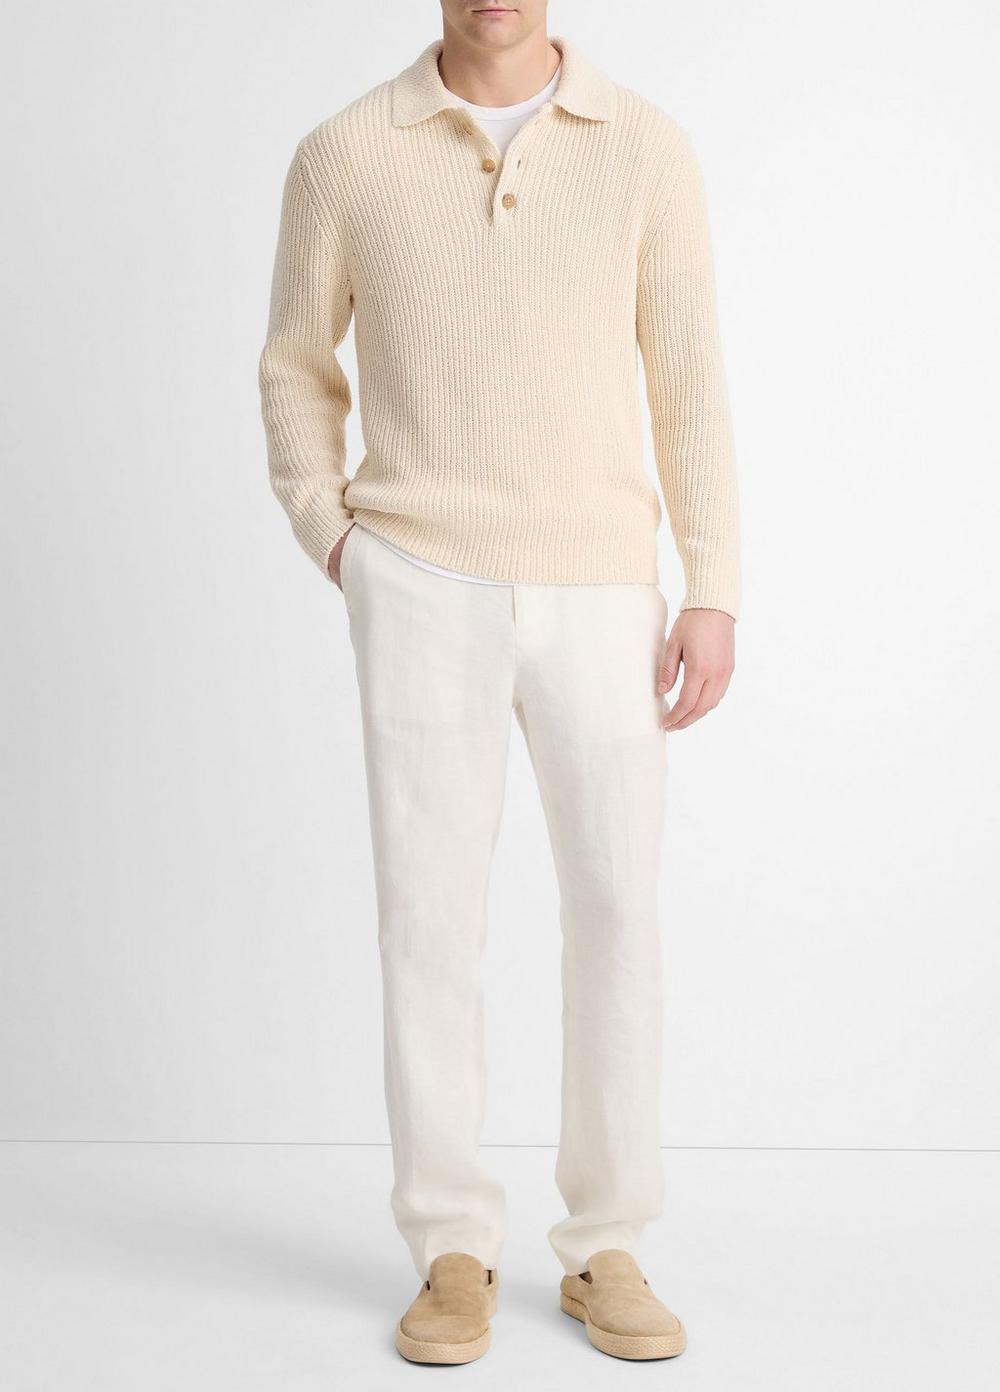 Italian Cotton-Blend Shaker Polo Sweater, Bone, Size M Vince